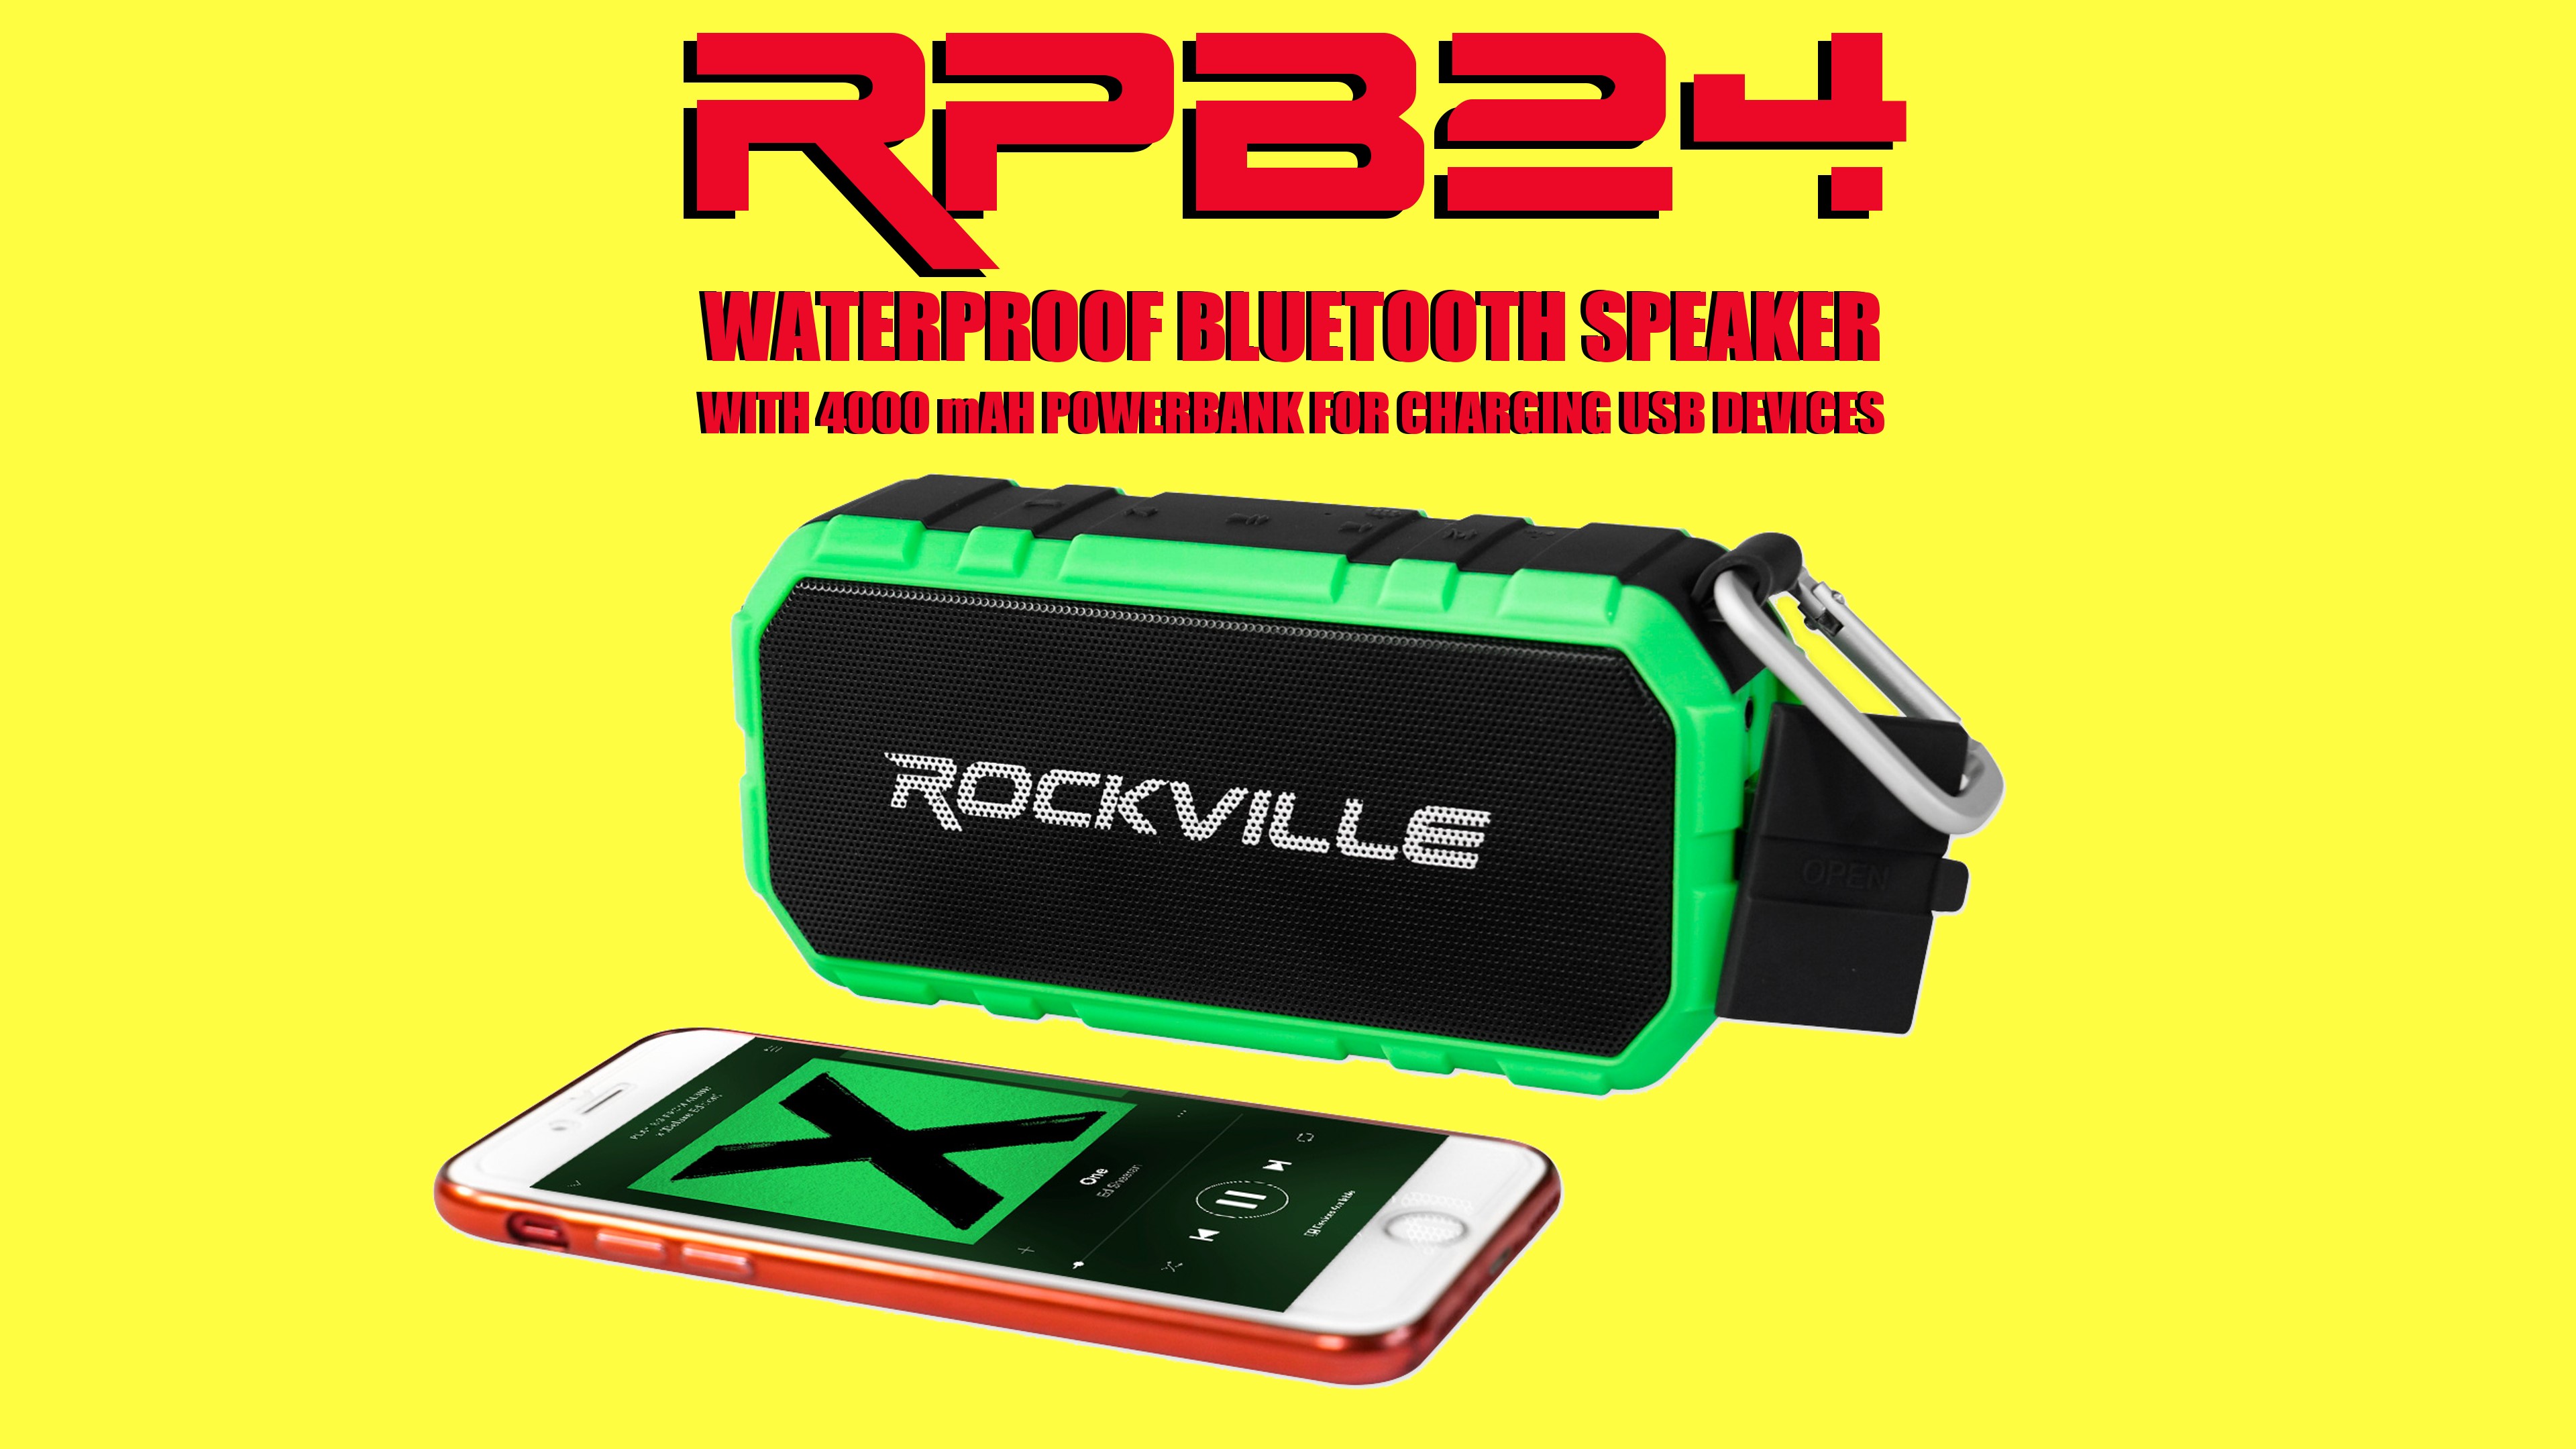 rockville audio bluetooth speaker